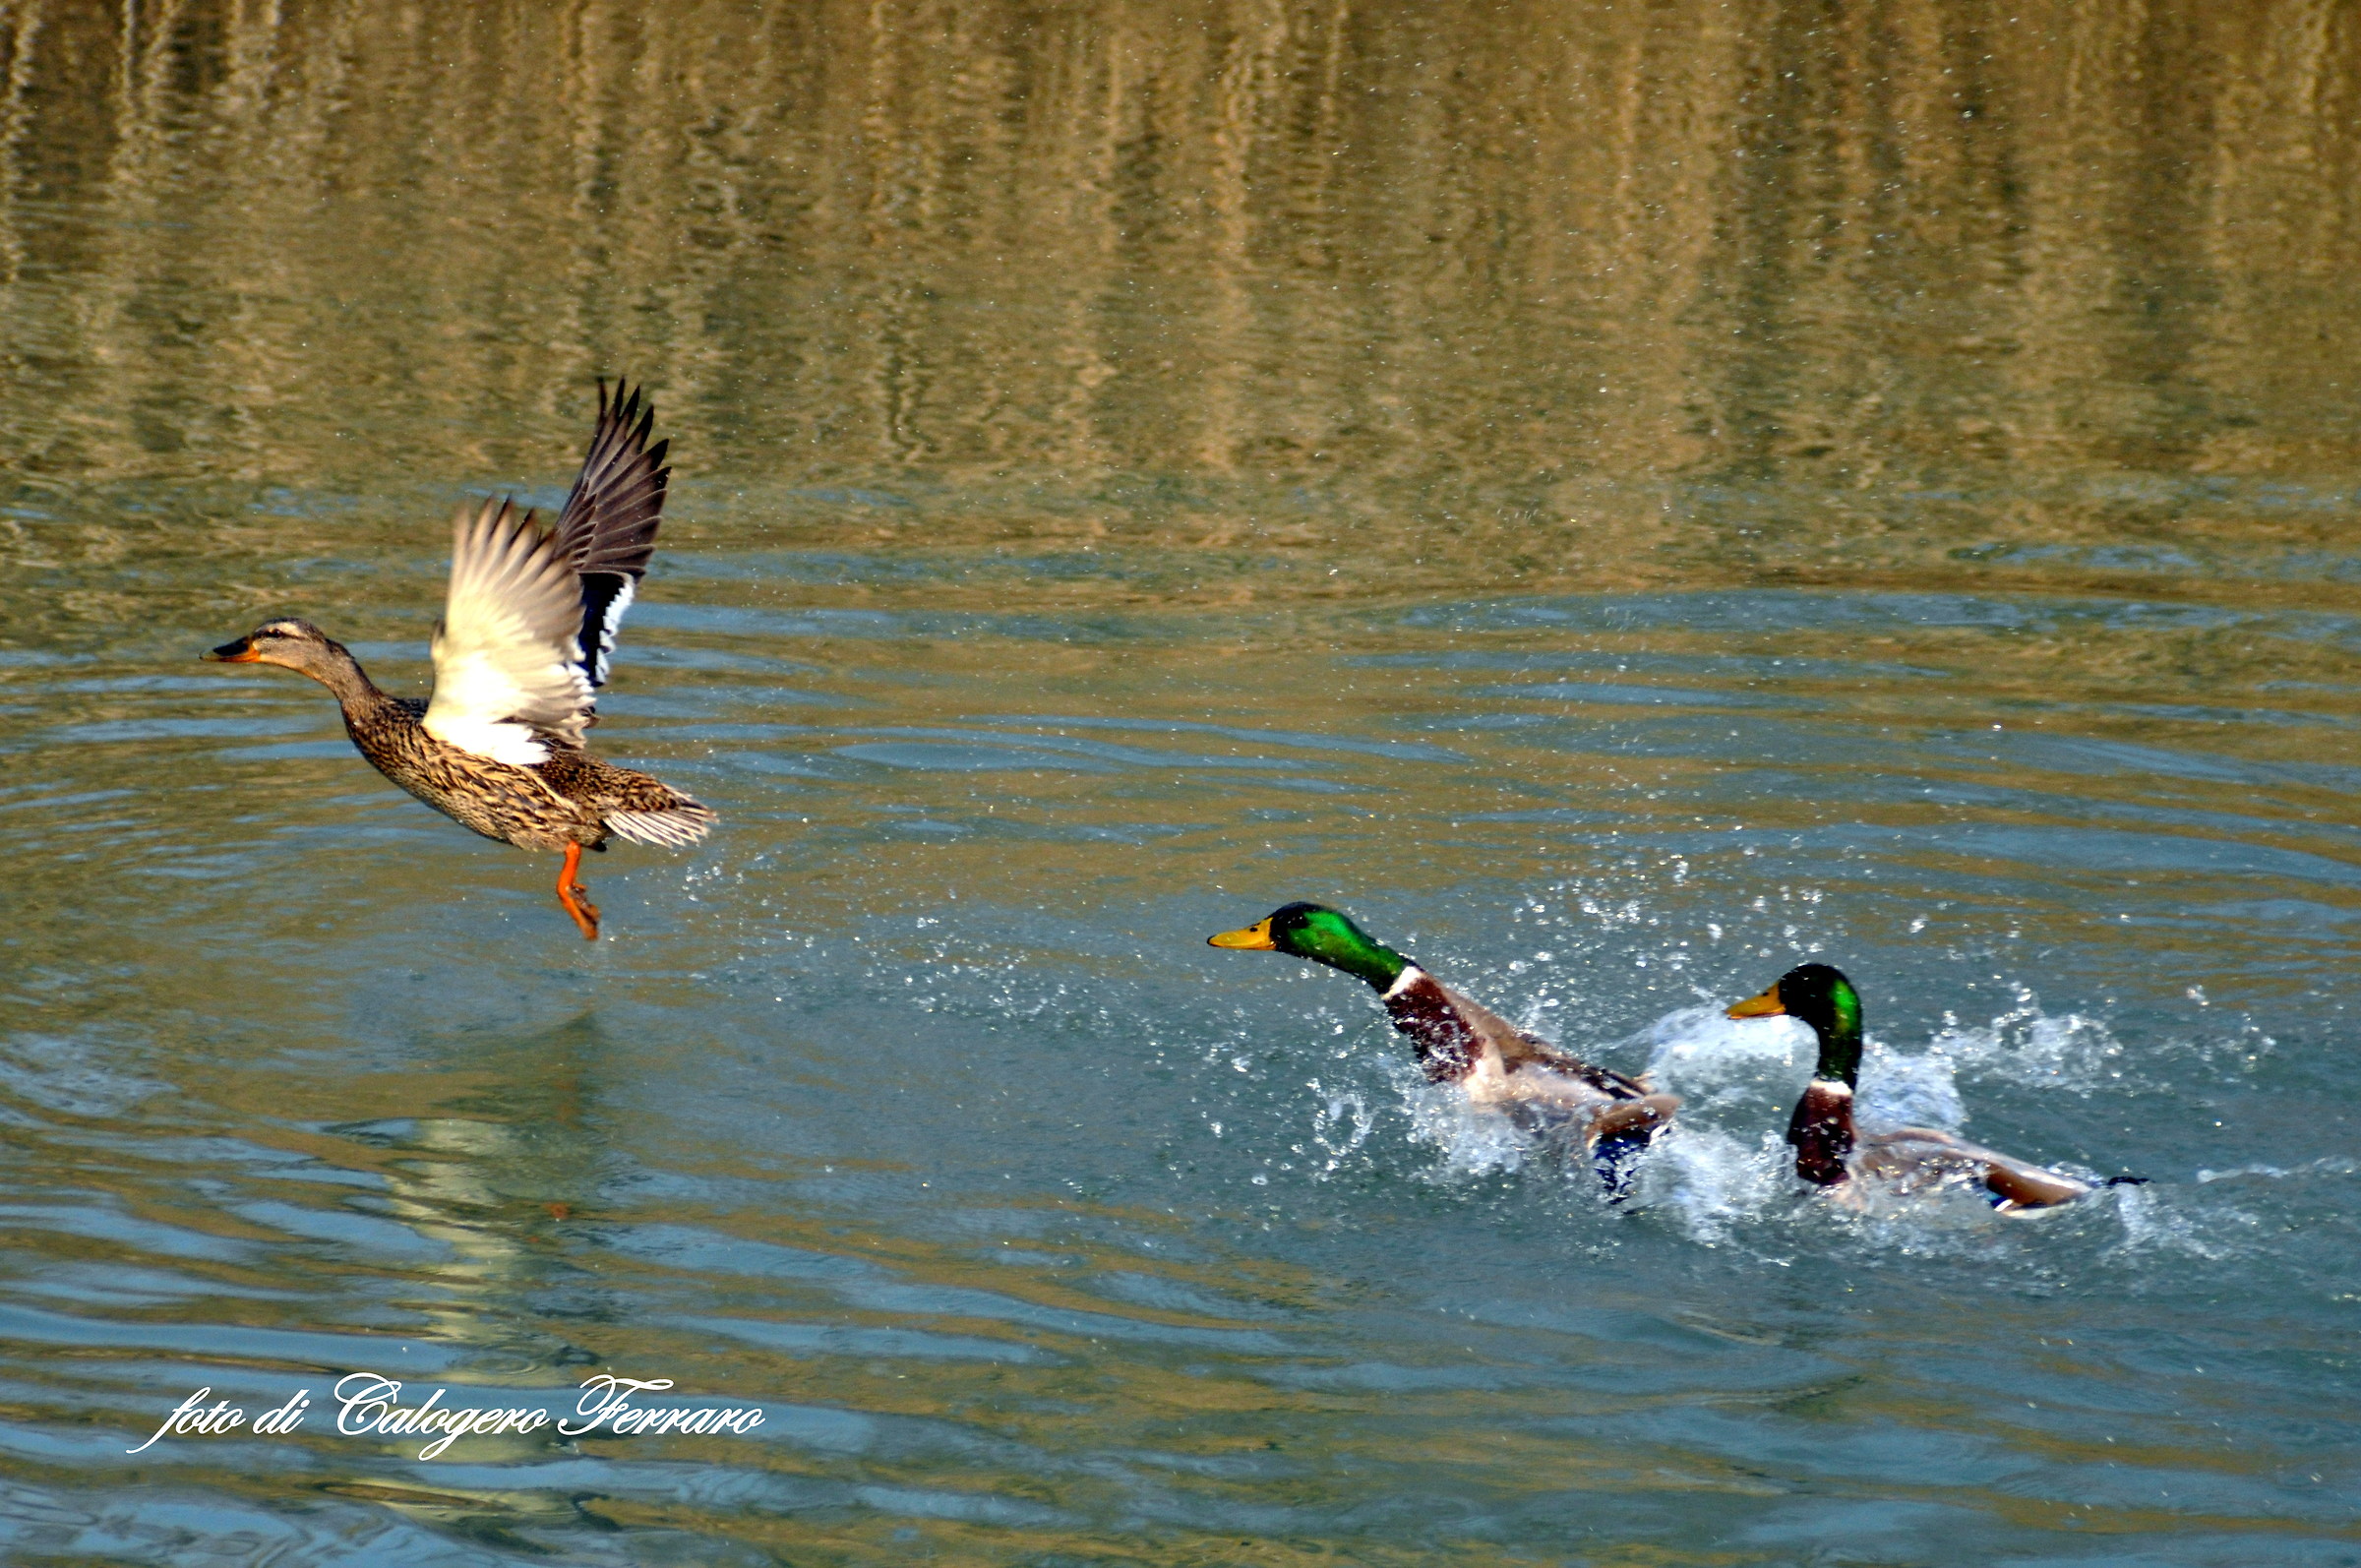 The flight of ducks...